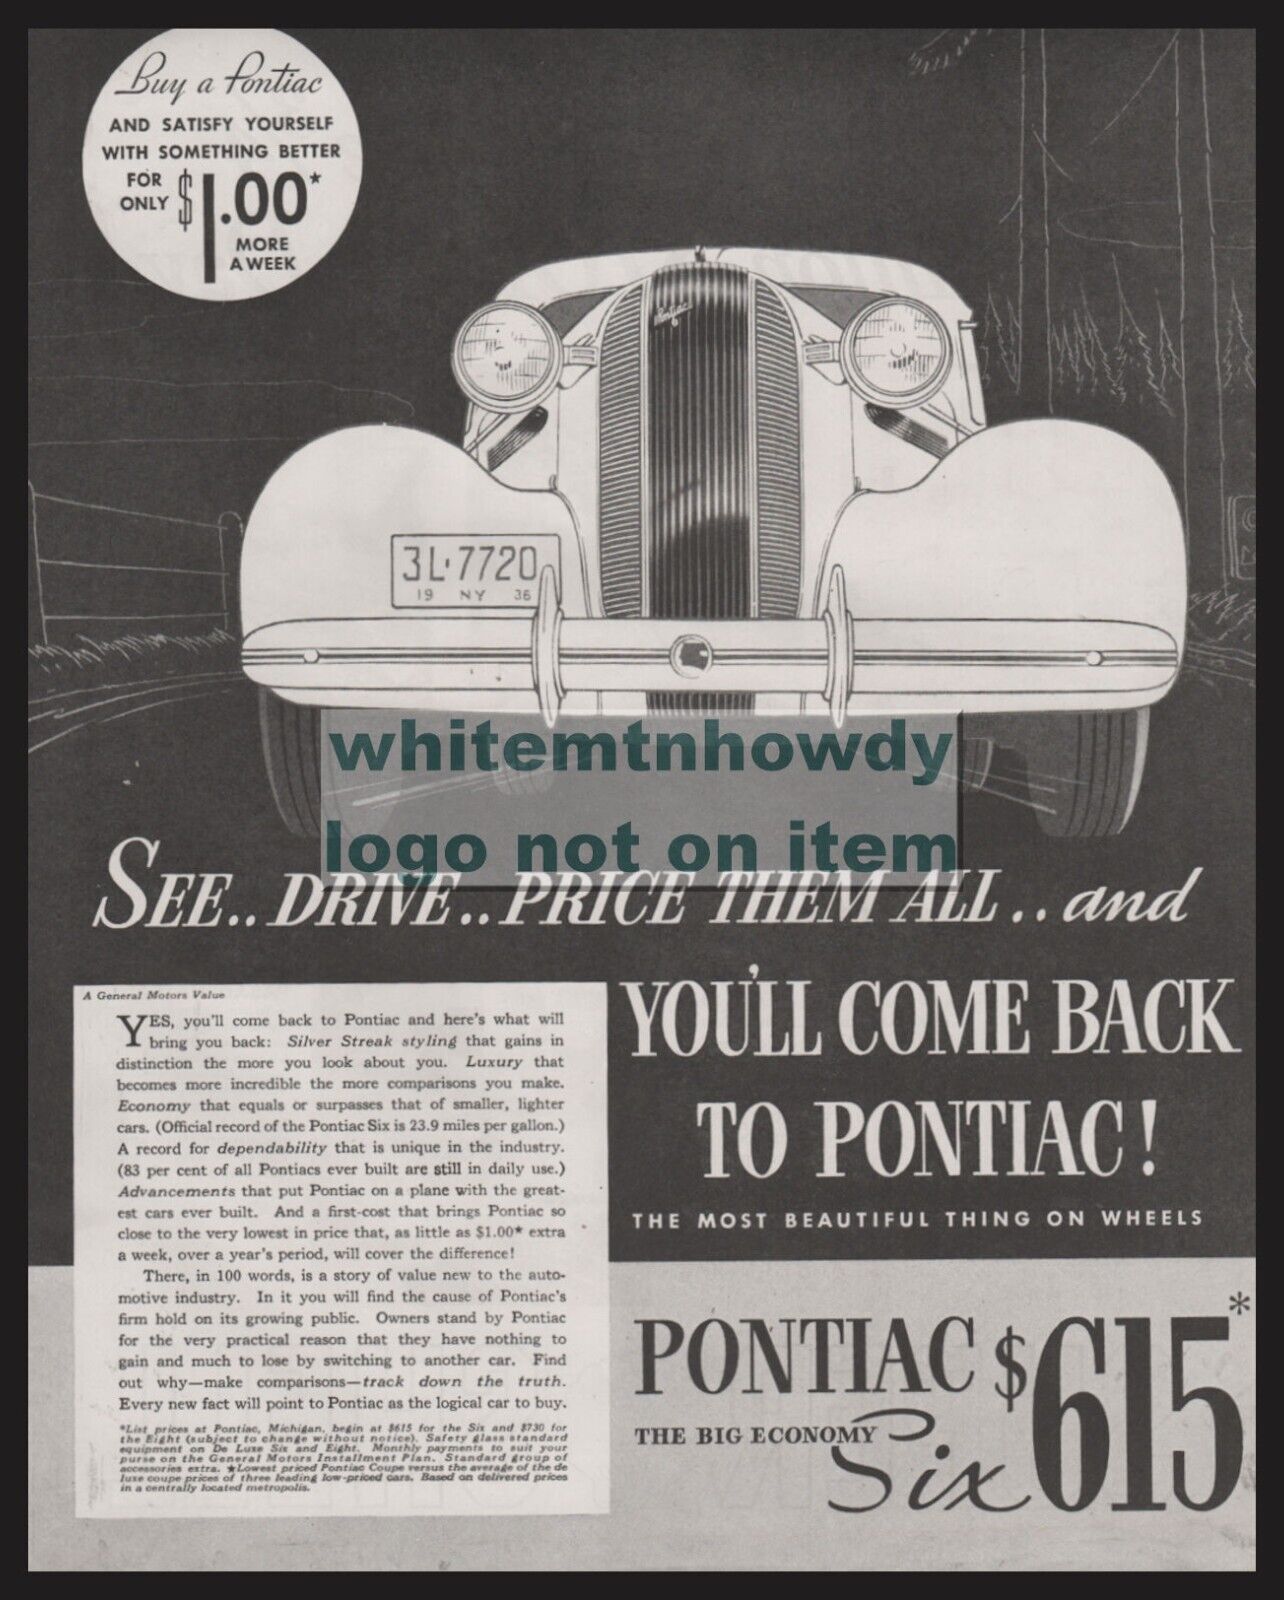 1936 PONTIAC Grill View 30s Classic Car AD w/ original price of $615